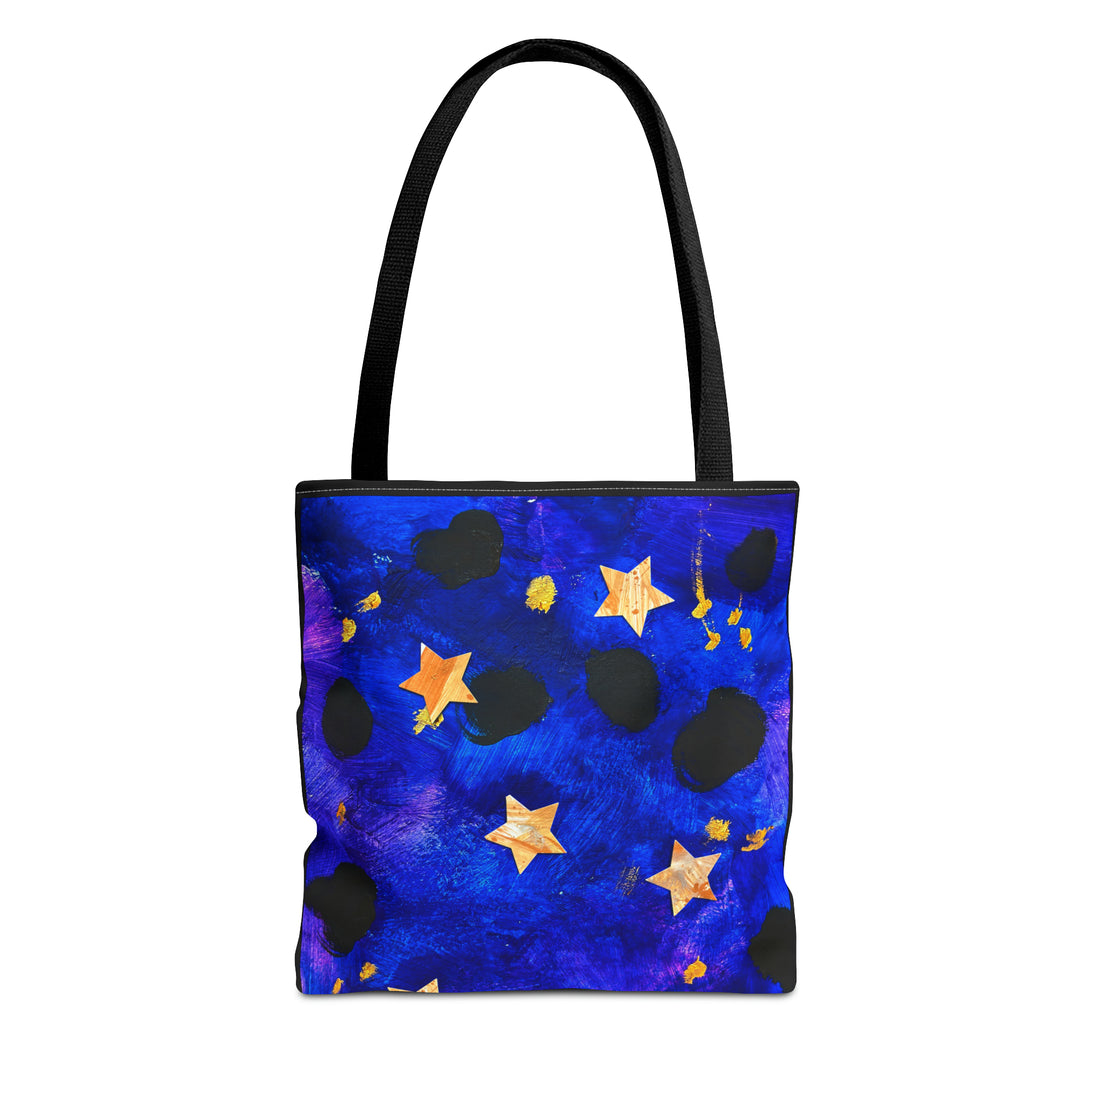 Starry Dream Tote Bag